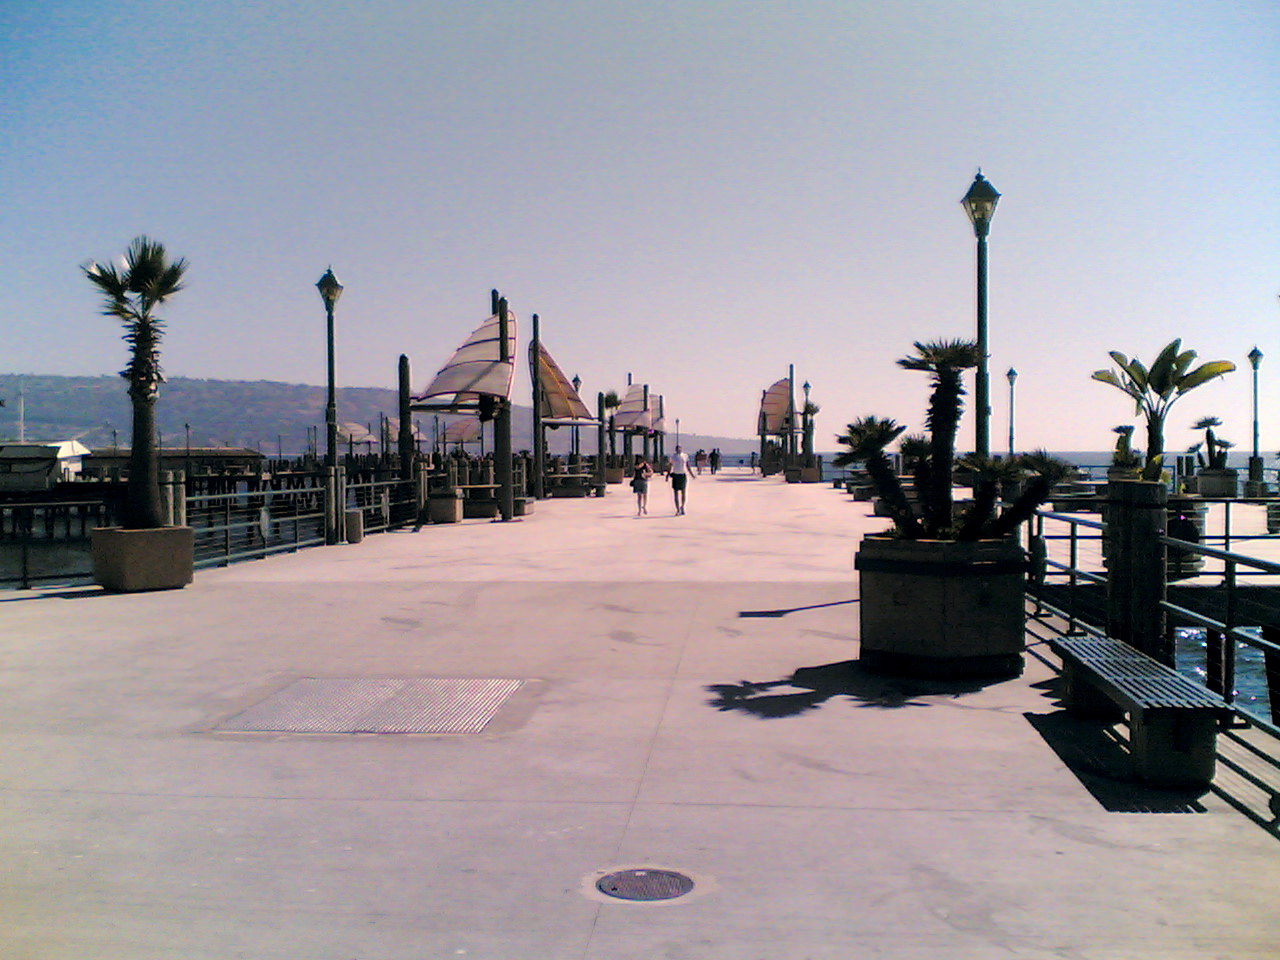 The Oc Pier